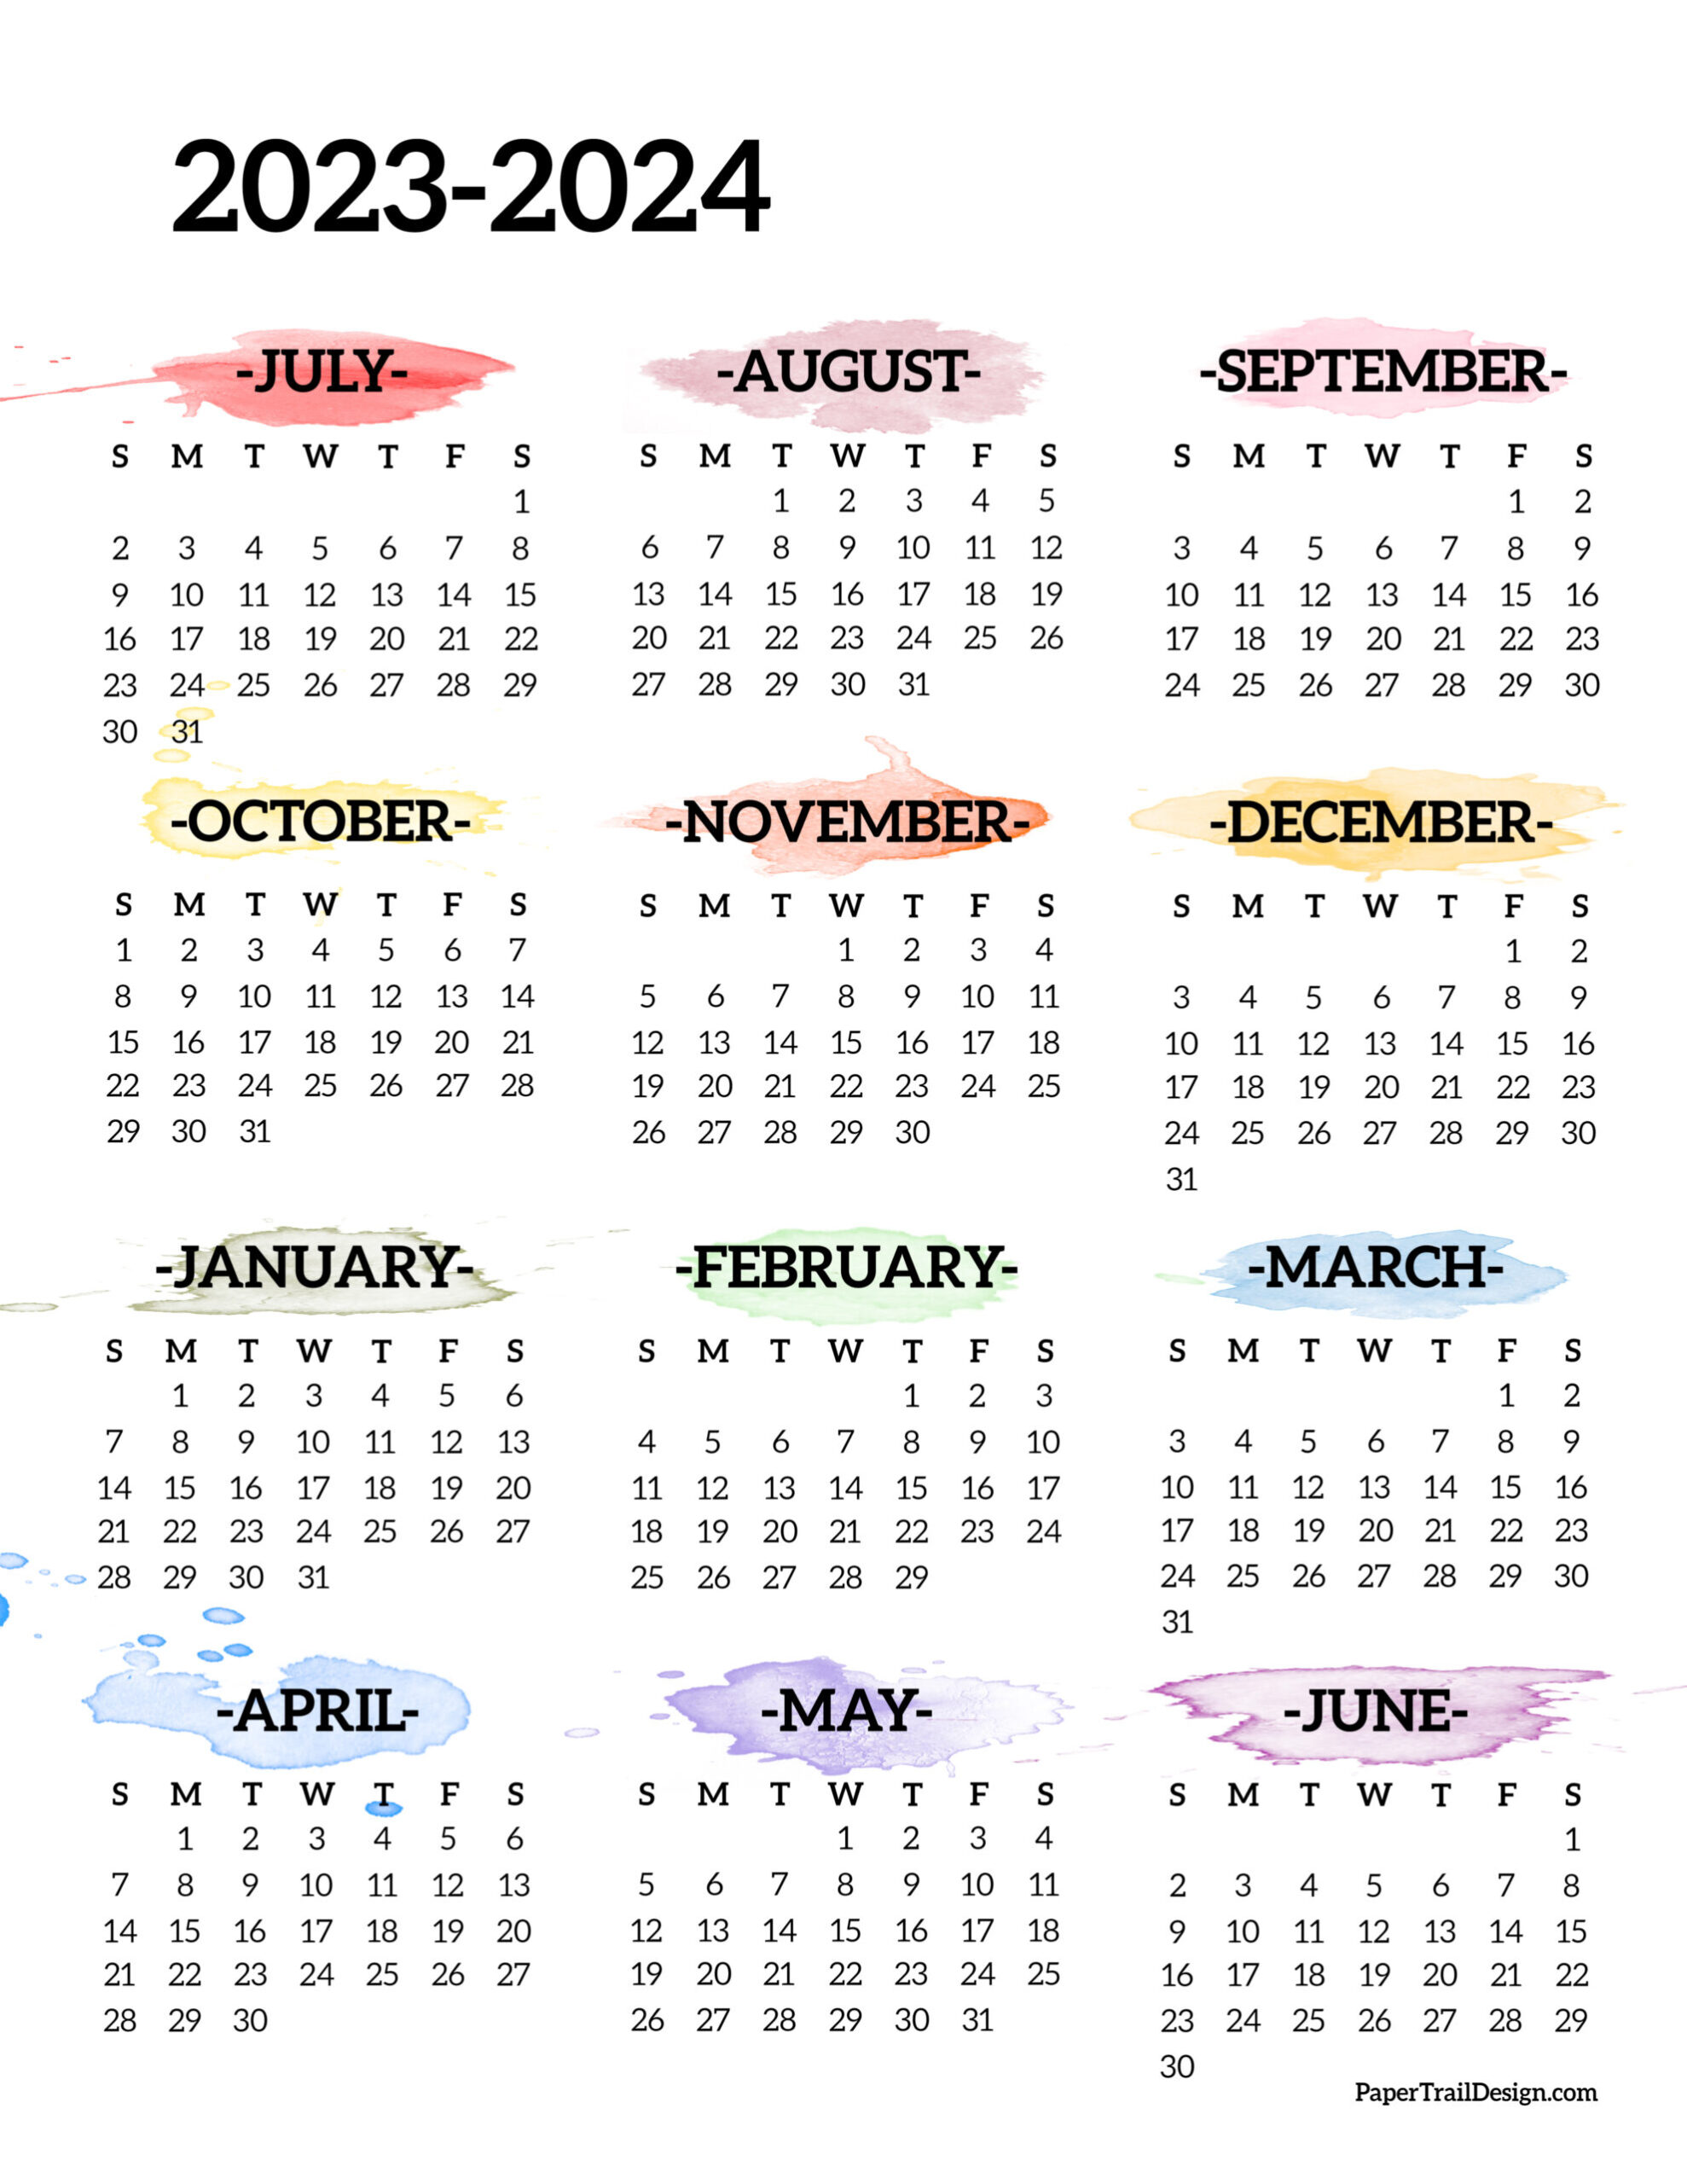 2023-2024 School Year Calendar Free Printable - Paper Trail Design for July 2023 To June 2024 Calendar Printable